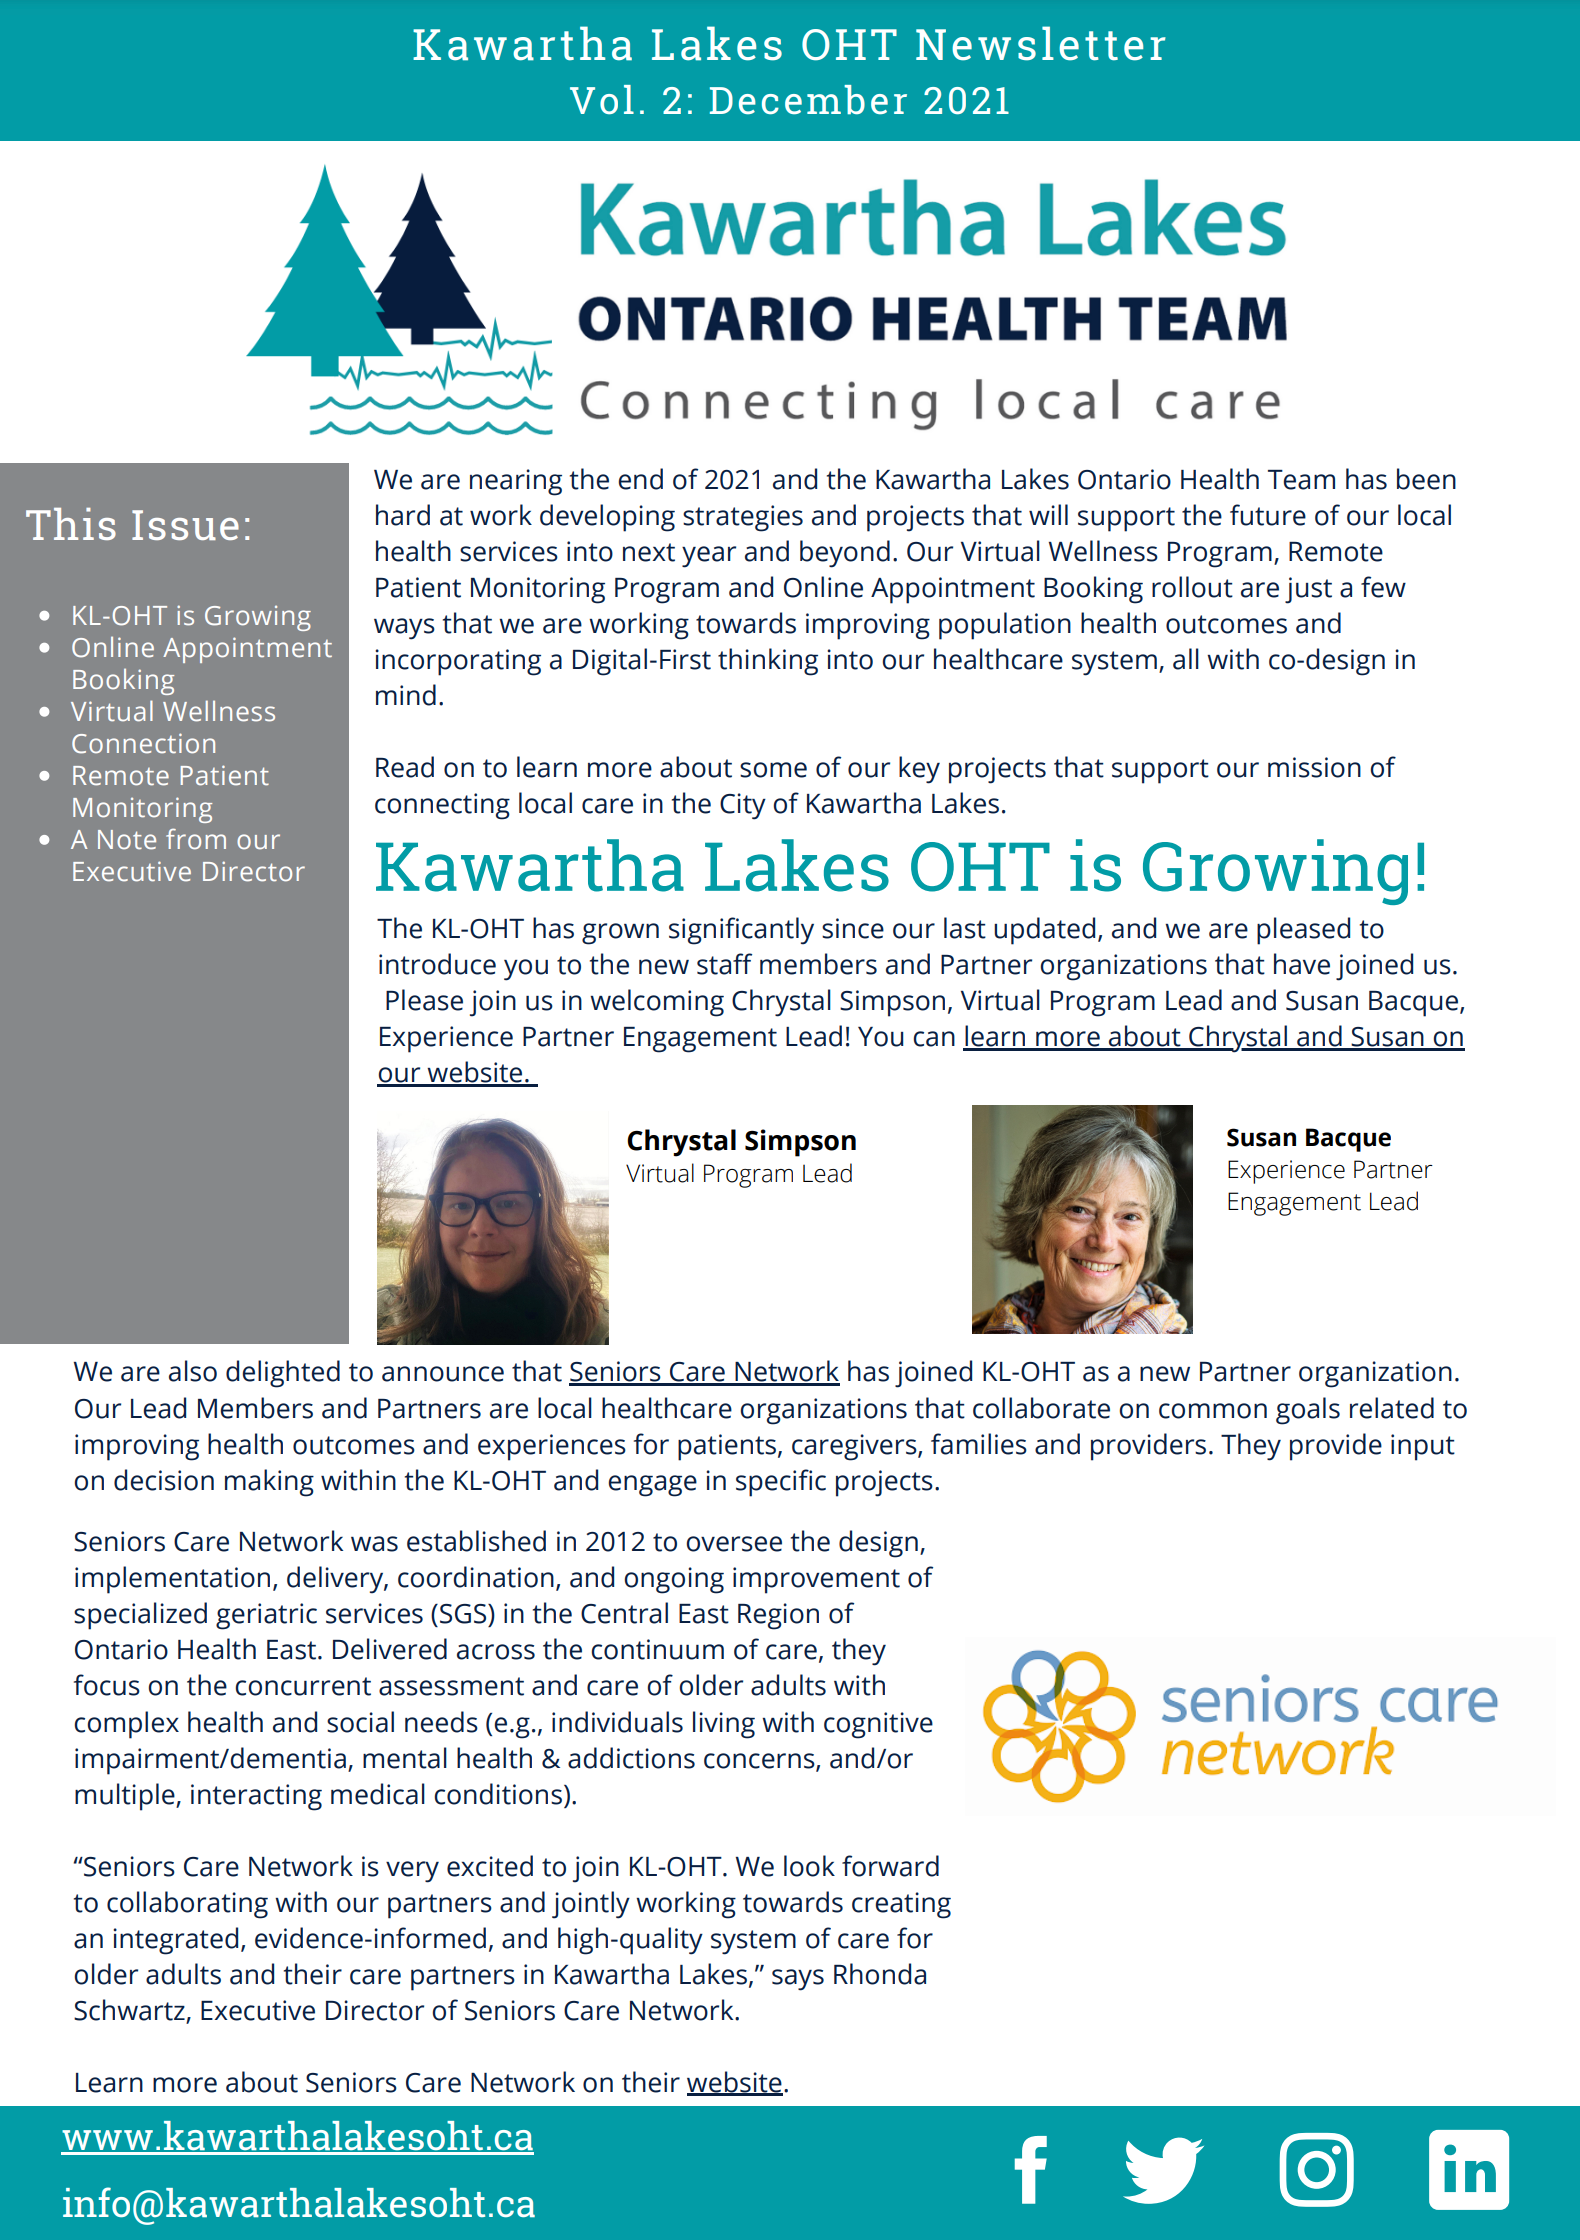 Kawartha Lakes OHT Newsletter image